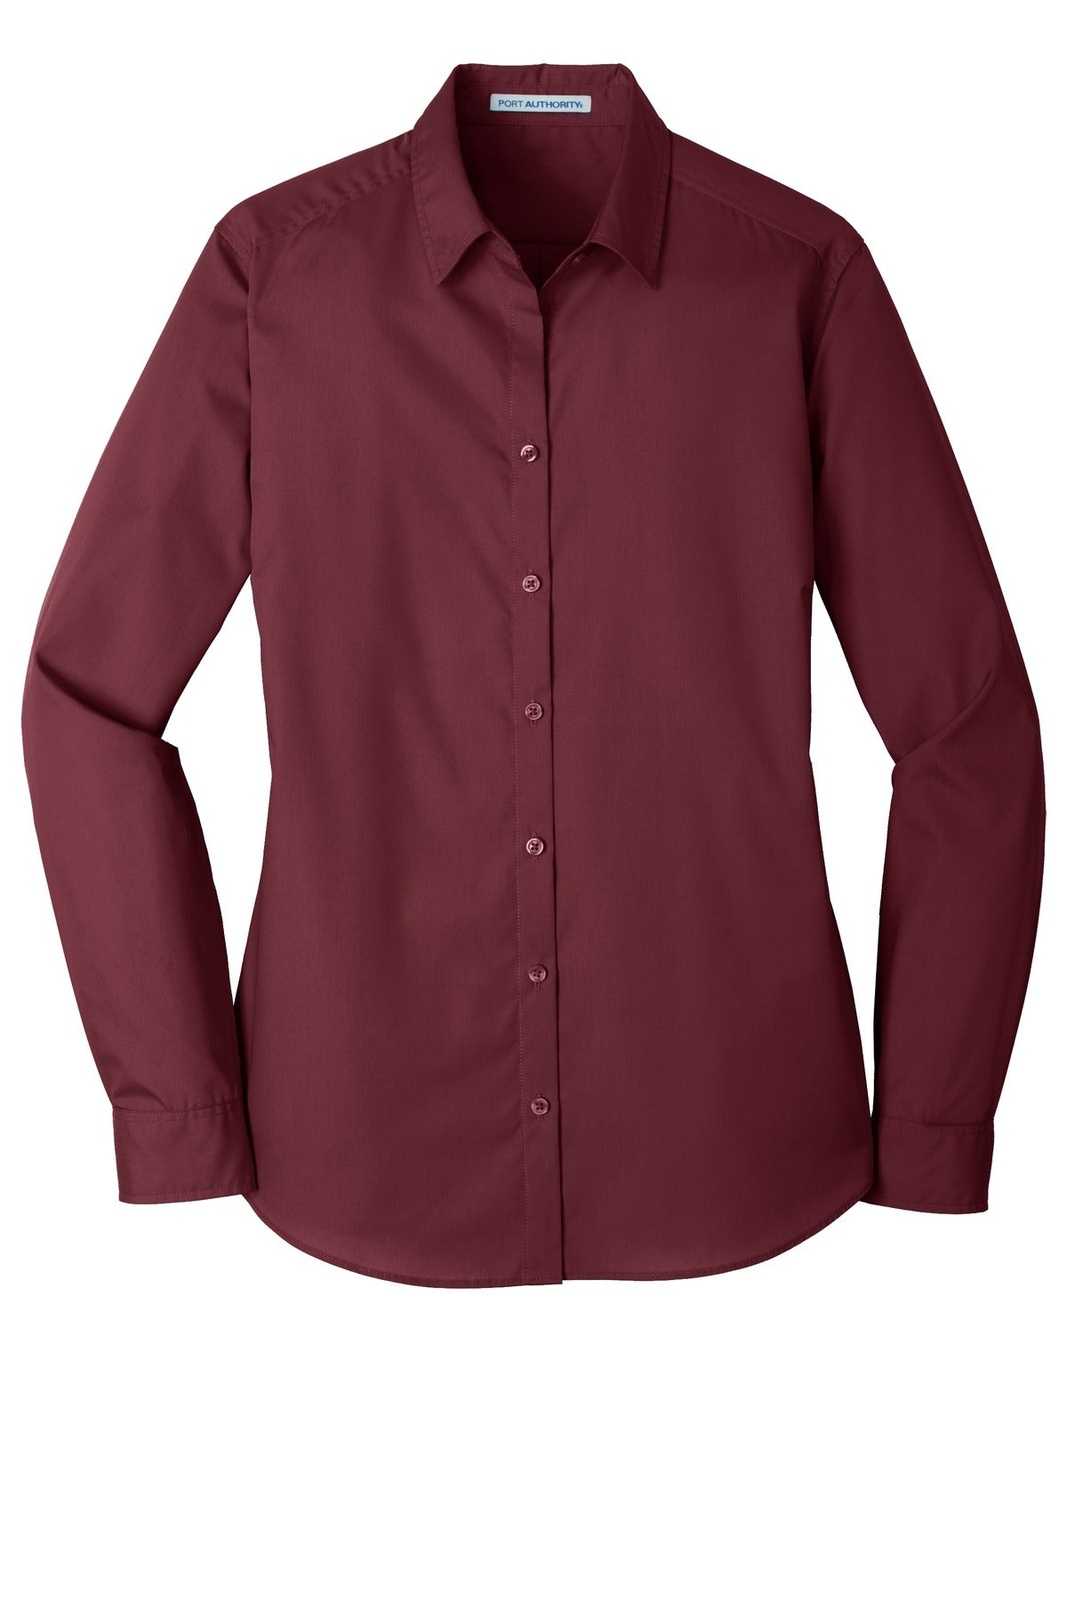 Port Authority LW100 Ladies Long Sleeve Carefree Poplin Shirt - Burgundy - HIT a Double - 5